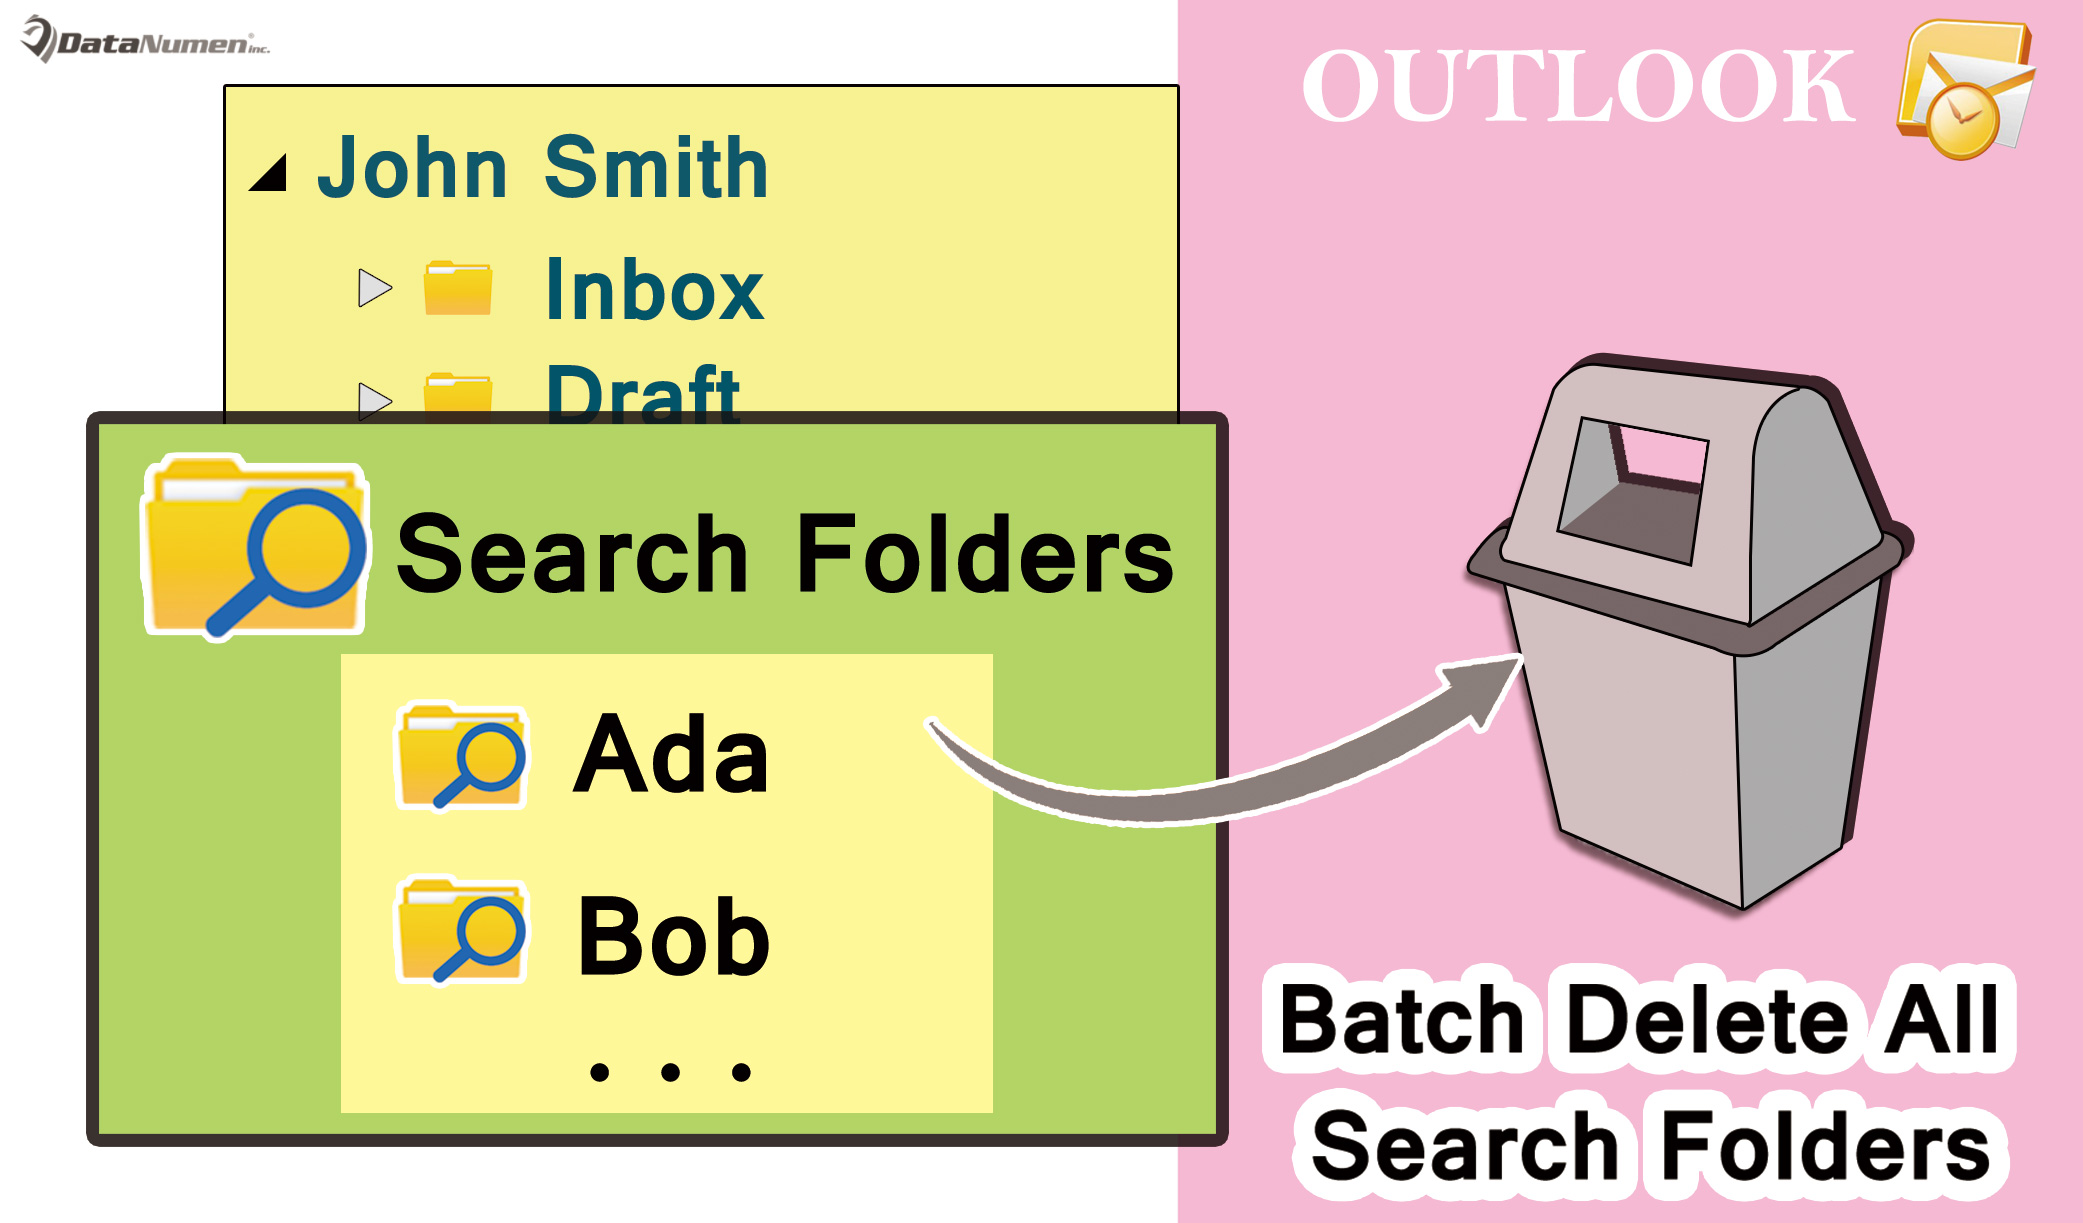 Batch Delete All Search Folders in Your Outlook